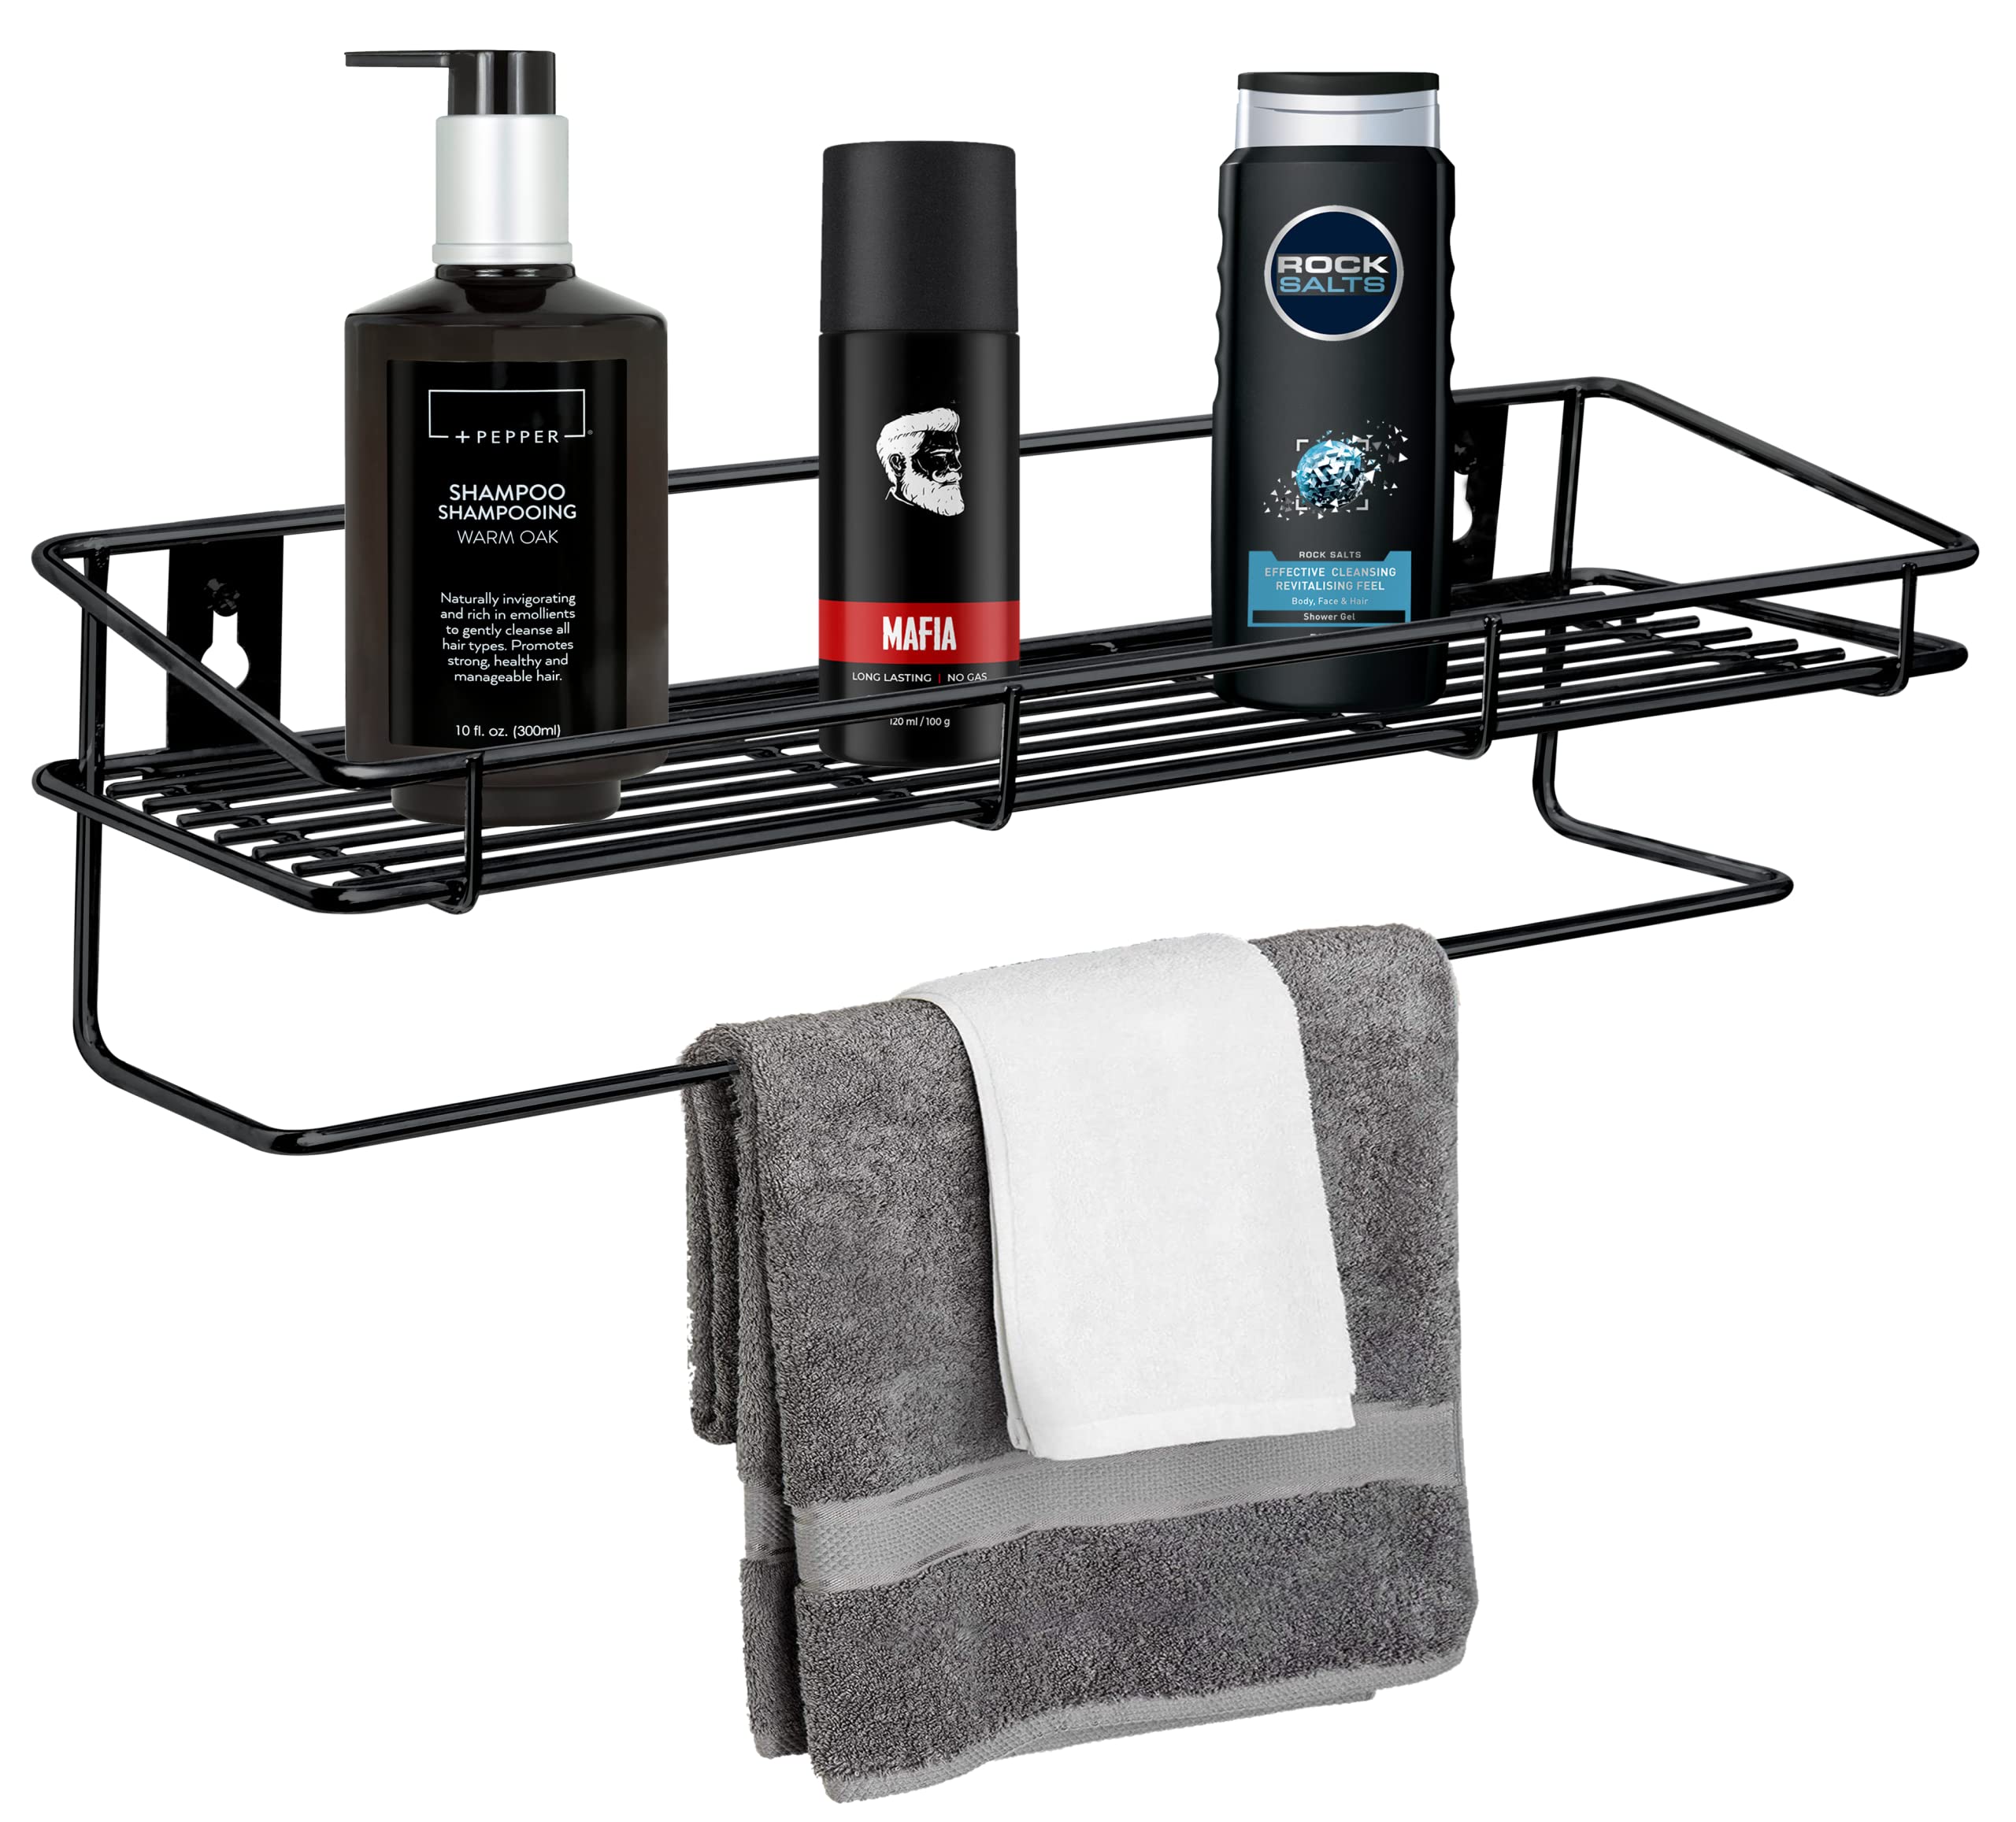 Plantex GI Steel Multipurpose Bathroom Shelf/Rack/Towel Holder/Bathroom Accessories - Wall Mount (Black)